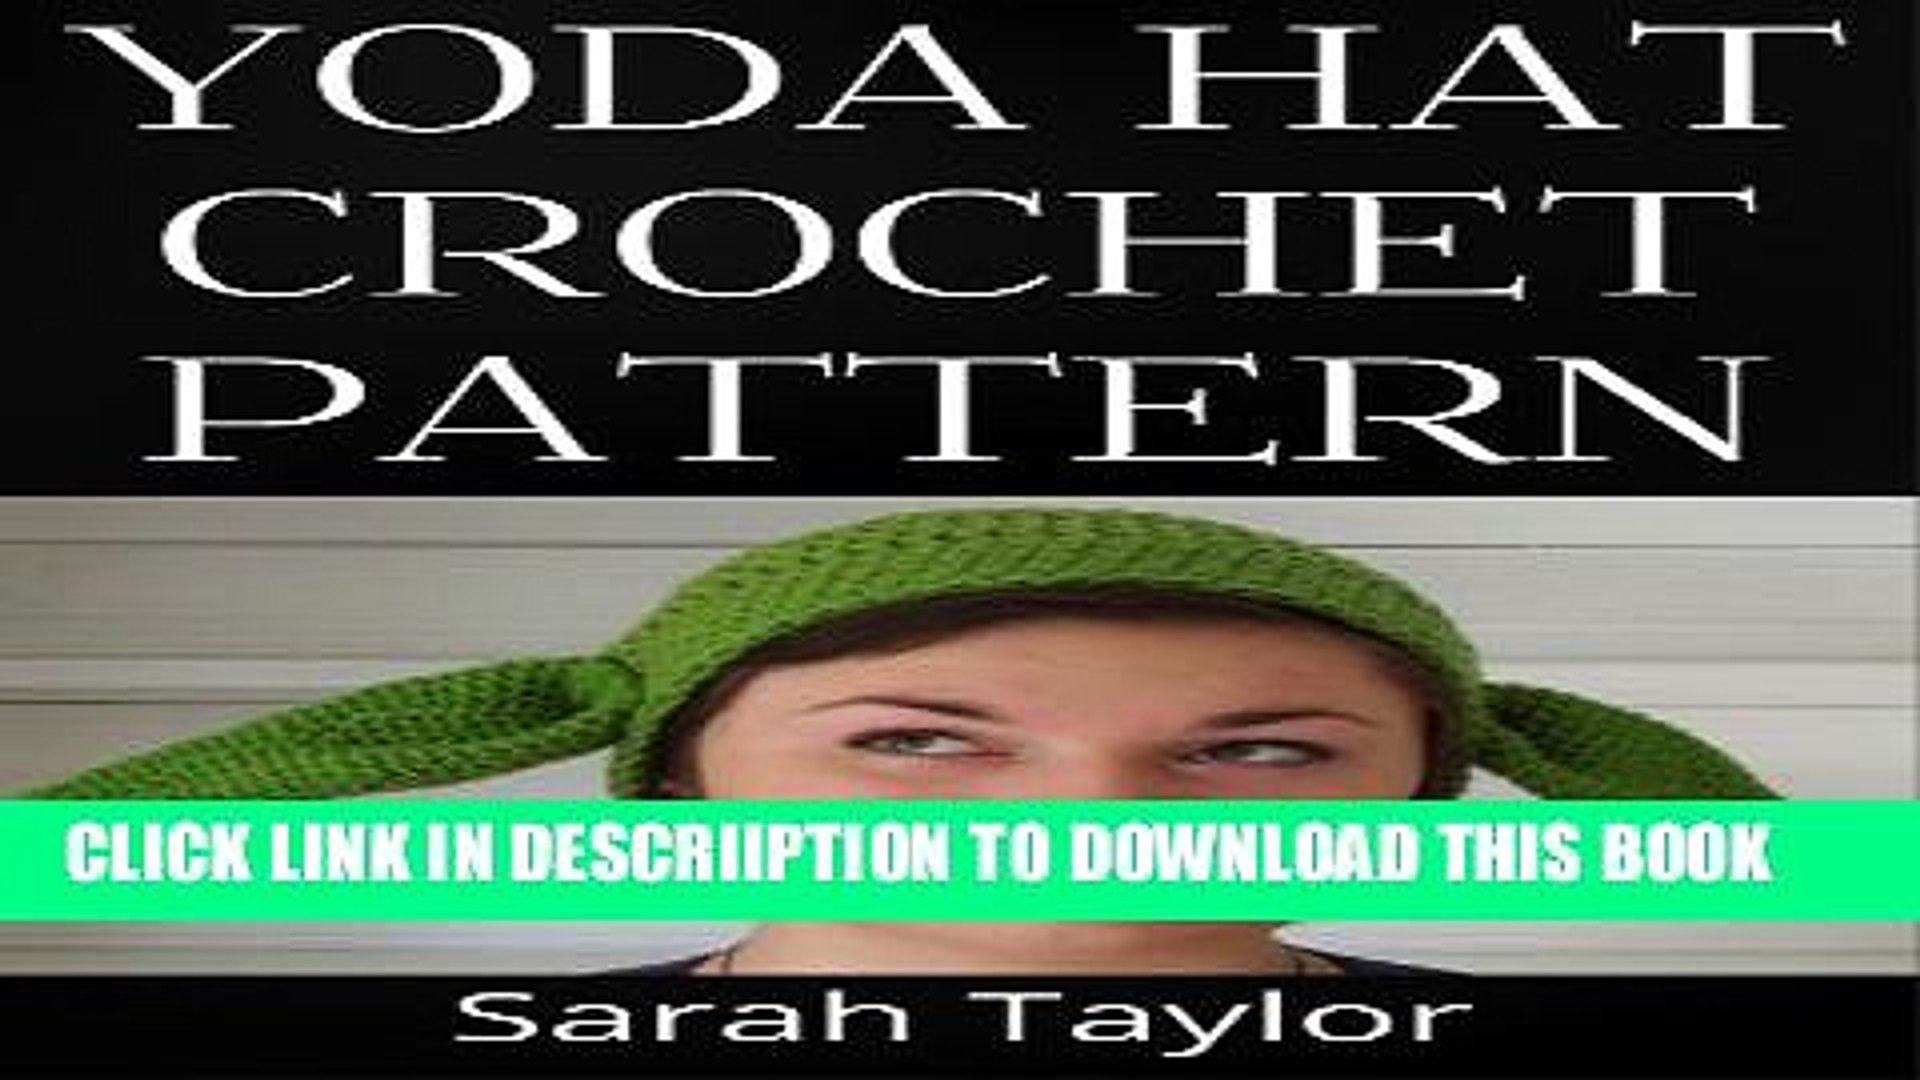 Free Crochet Yoda Hat Pattern New Yoda Hat Crochet Pattern Exclusive Full Ebook Video Dailymotion